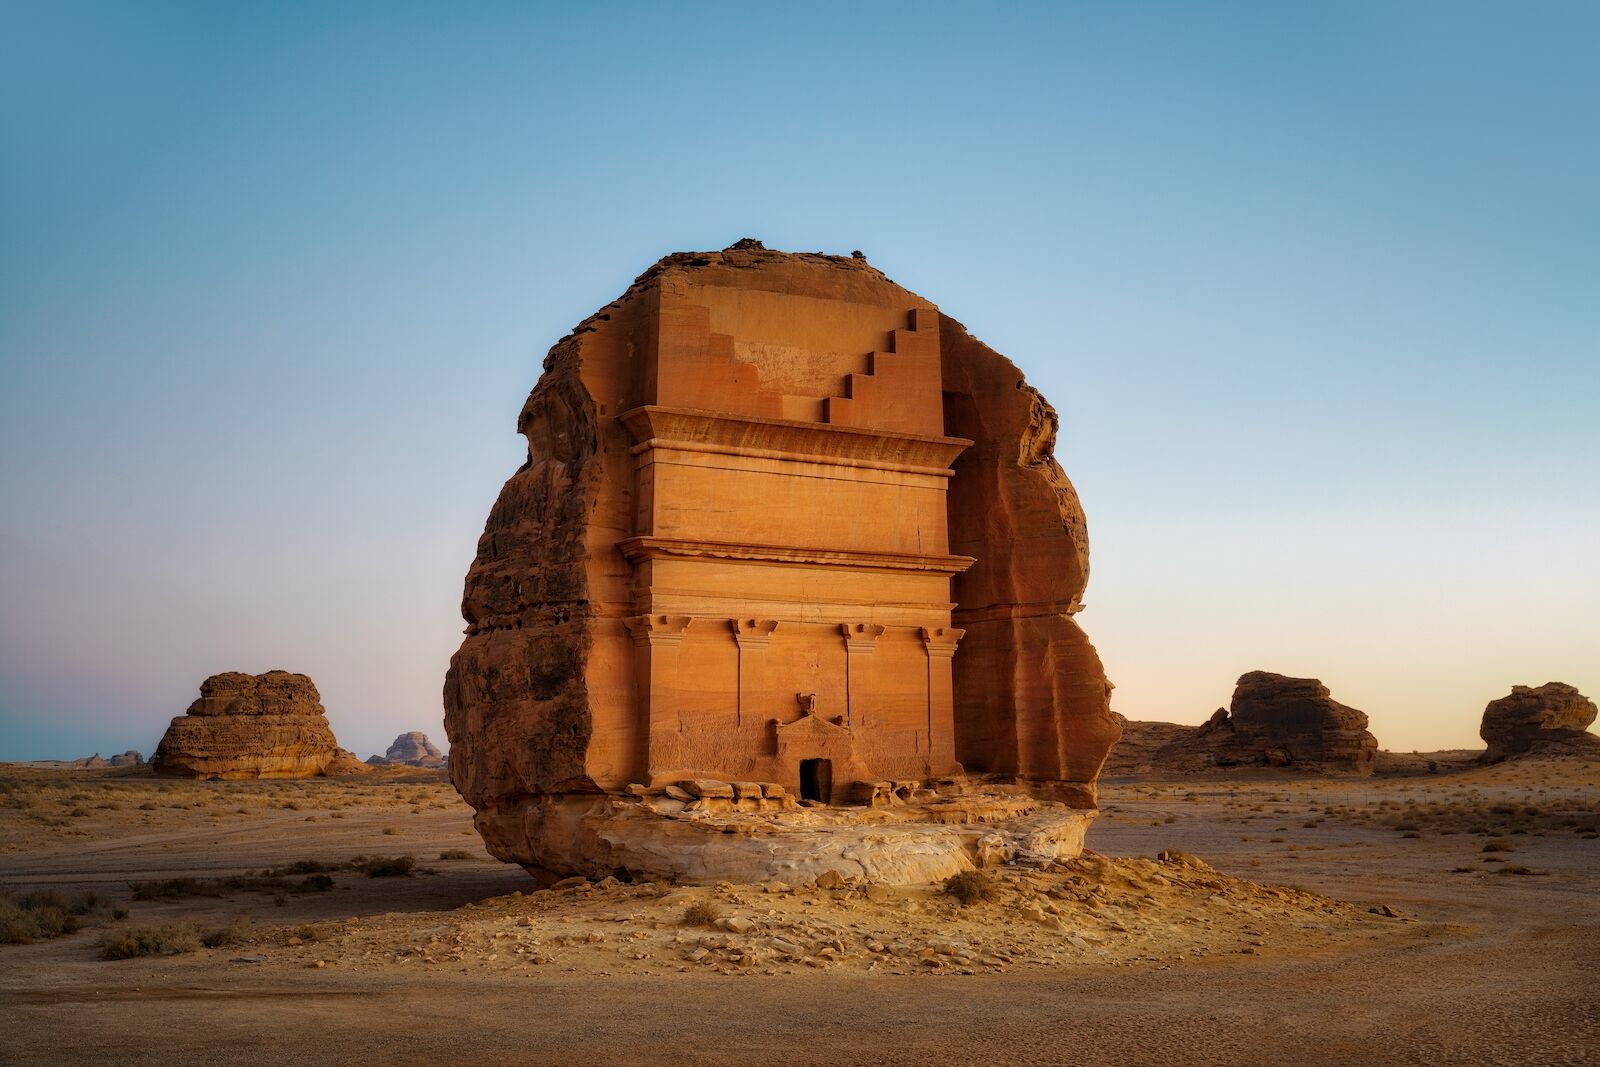 Hegra, an archeological site in the desert in Saudi Arabia